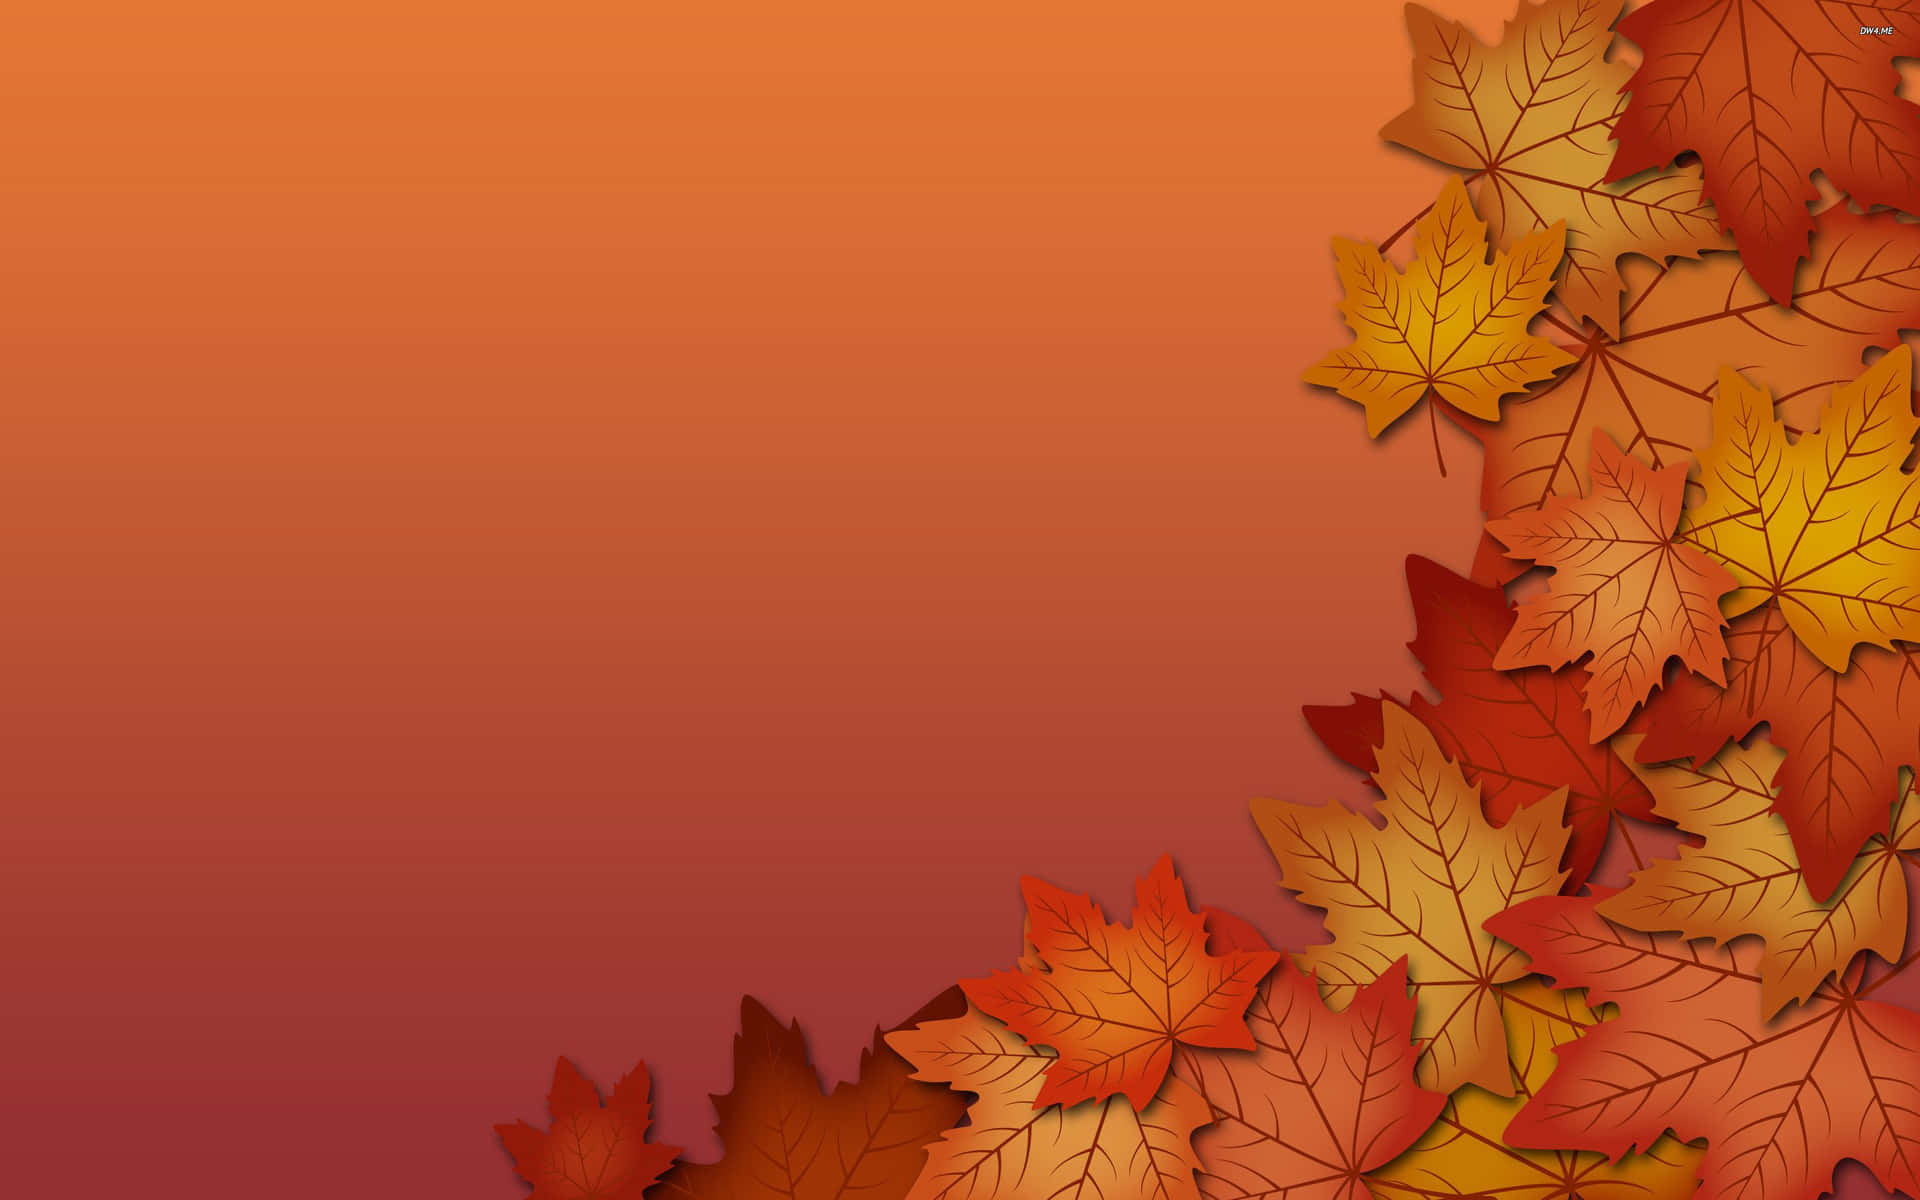 Vibrant Fall Colors in a Serene Landscape